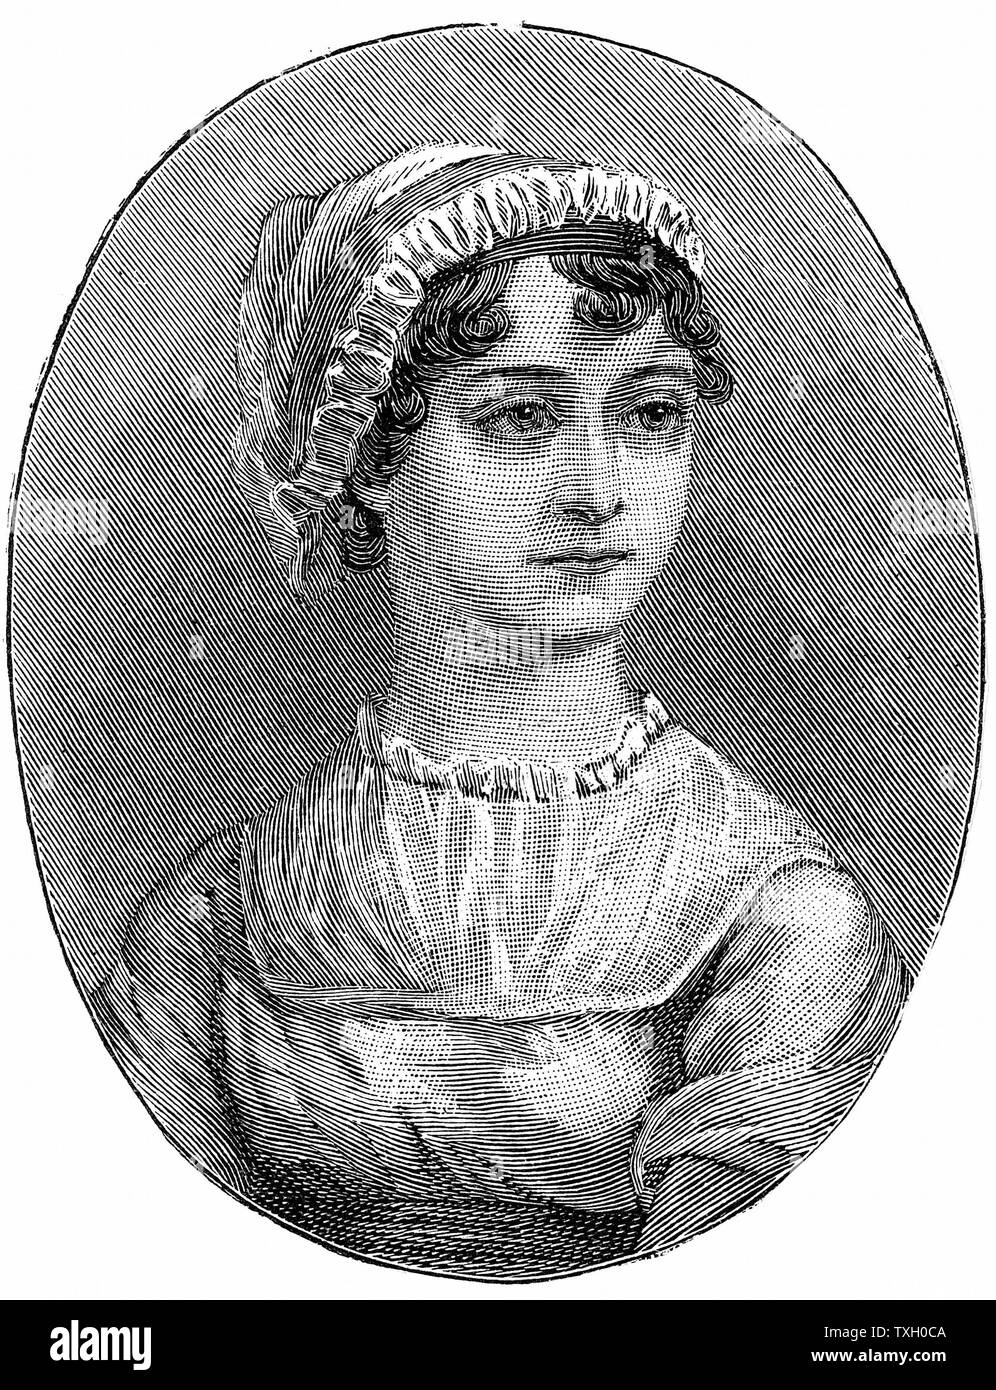 Explore 4+ Free Jane Austen Illustrations: Download Now - Pixabay